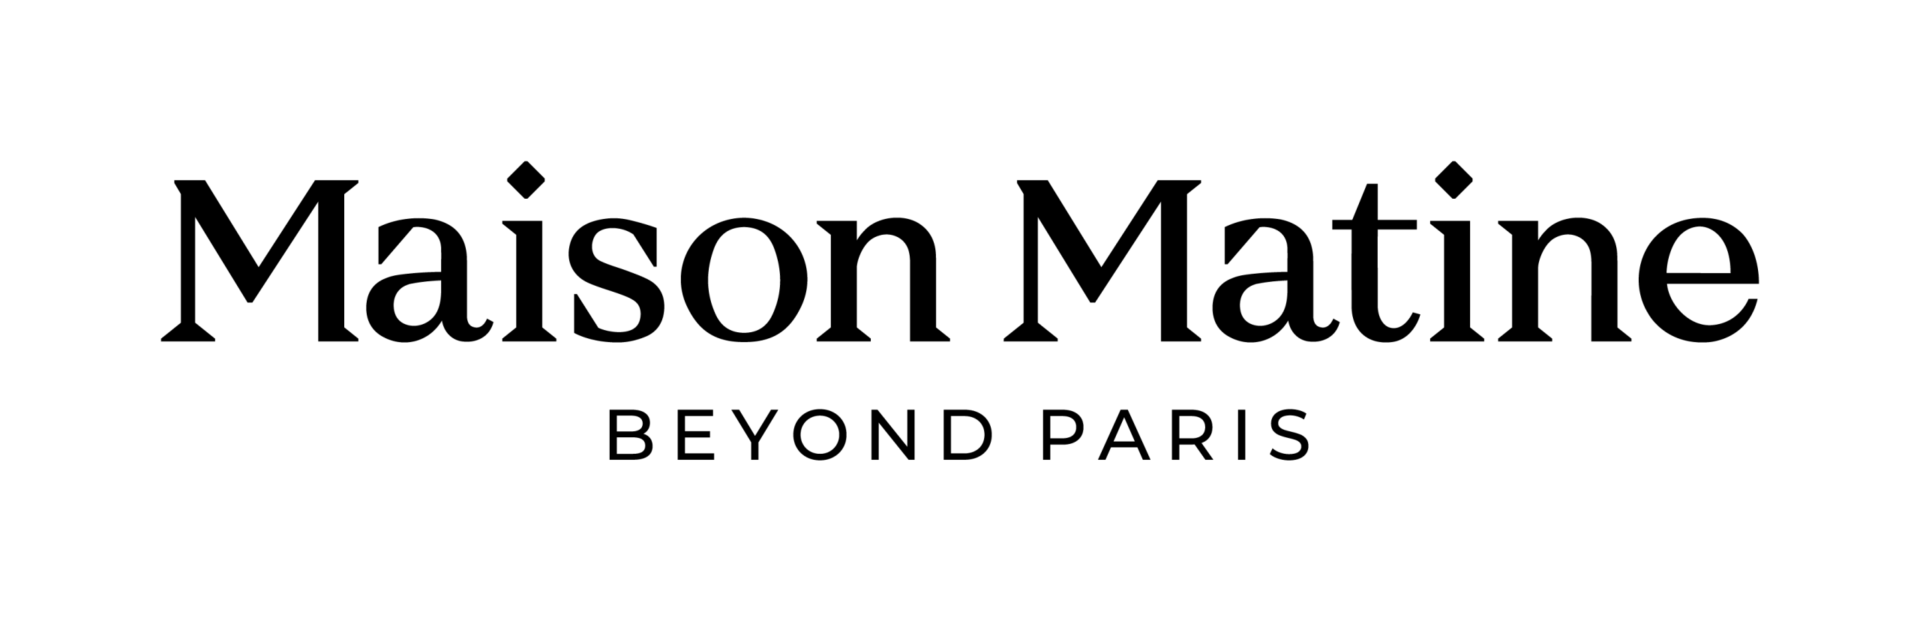 Logo Maison Matine png - Accueil